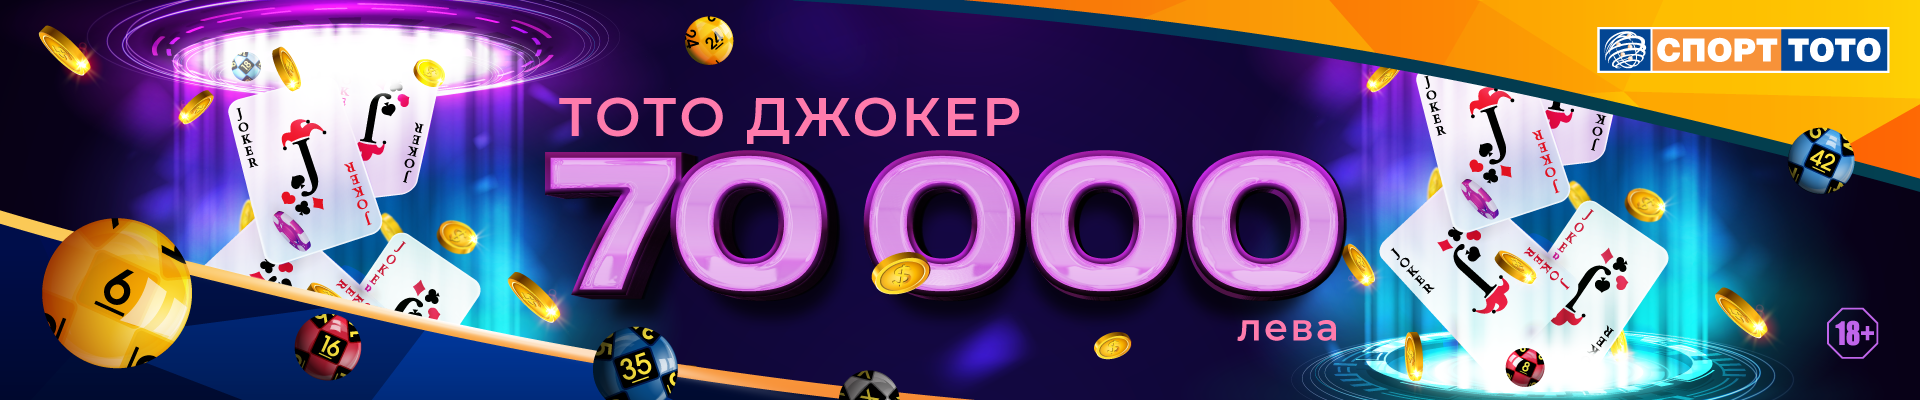 Тото Джокер 70 000